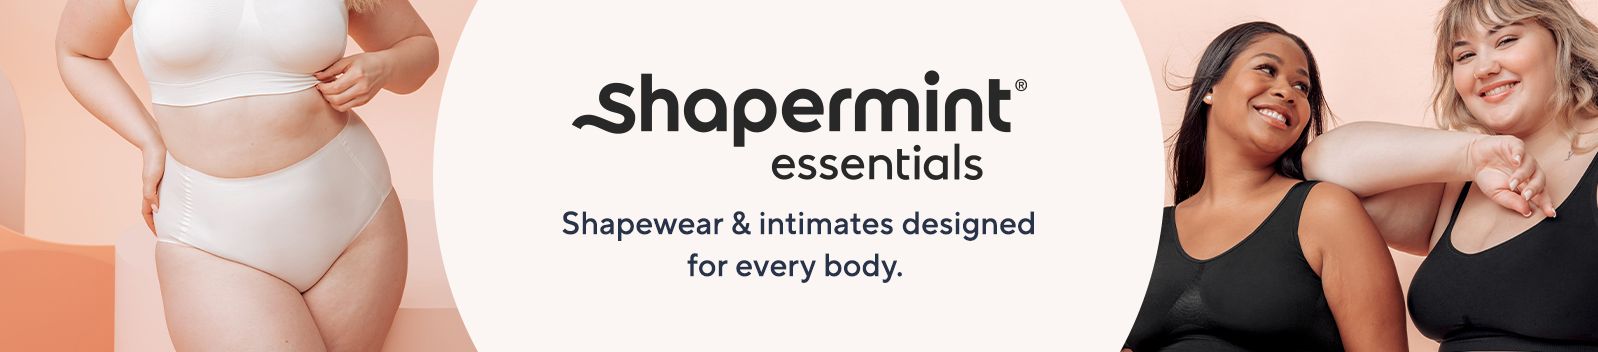 Shapermint, Intimates & Sleepwear